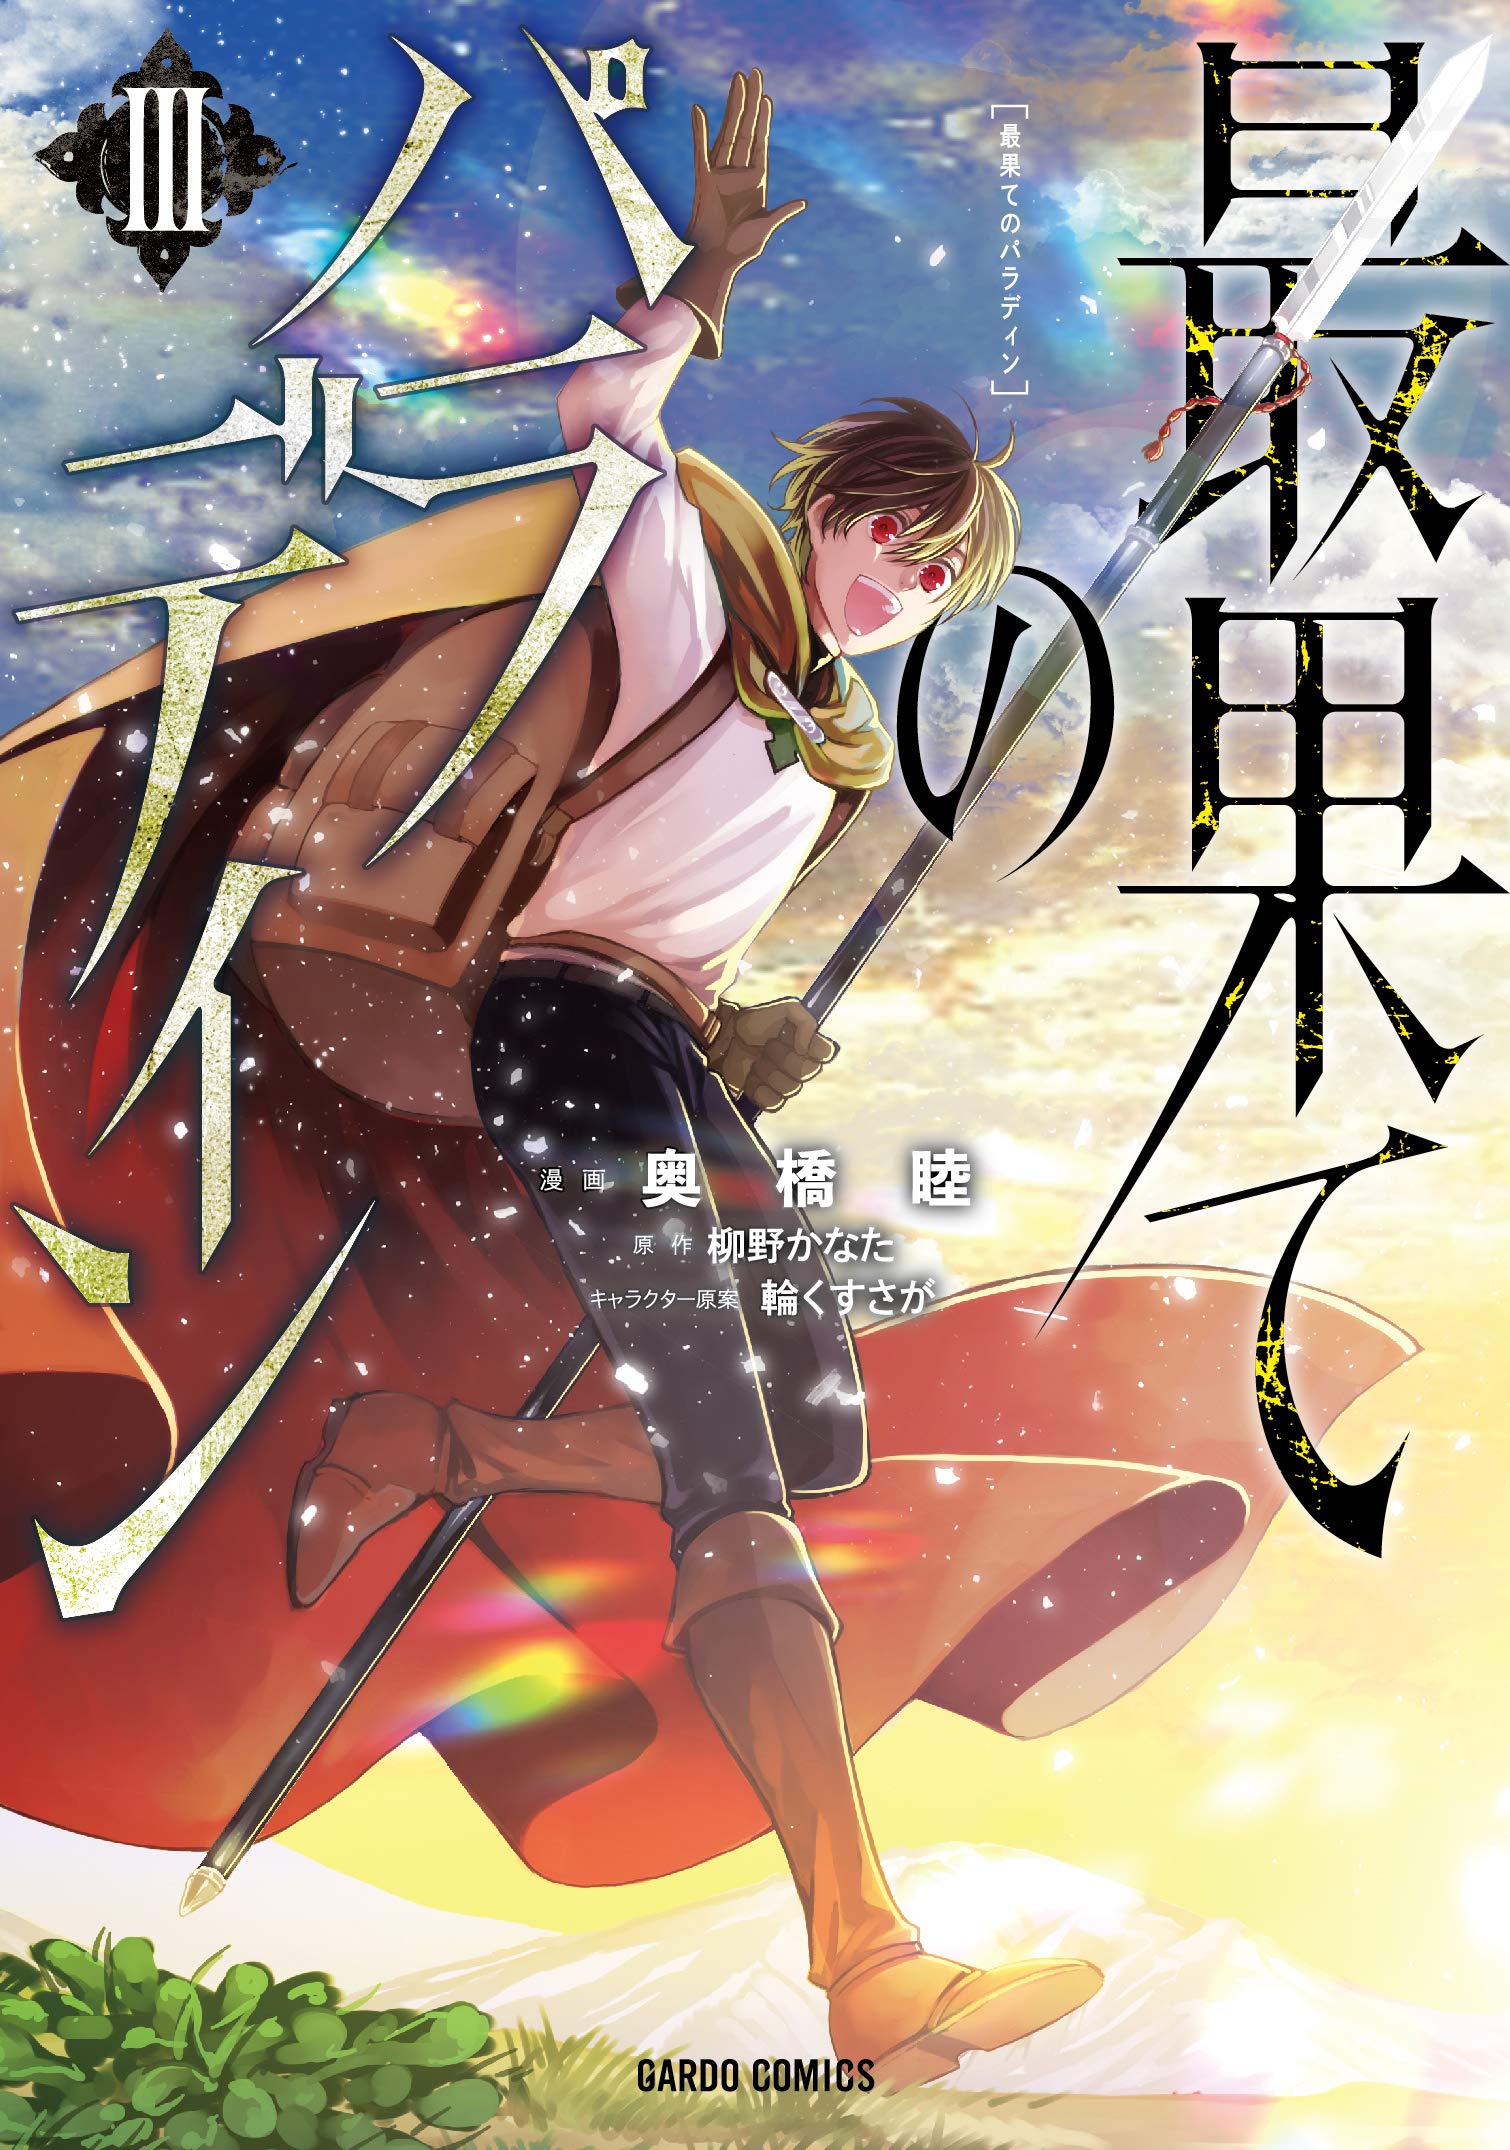 The Faraway Paladin (Manga) Omnibus 1 by Yanagino, Kanata